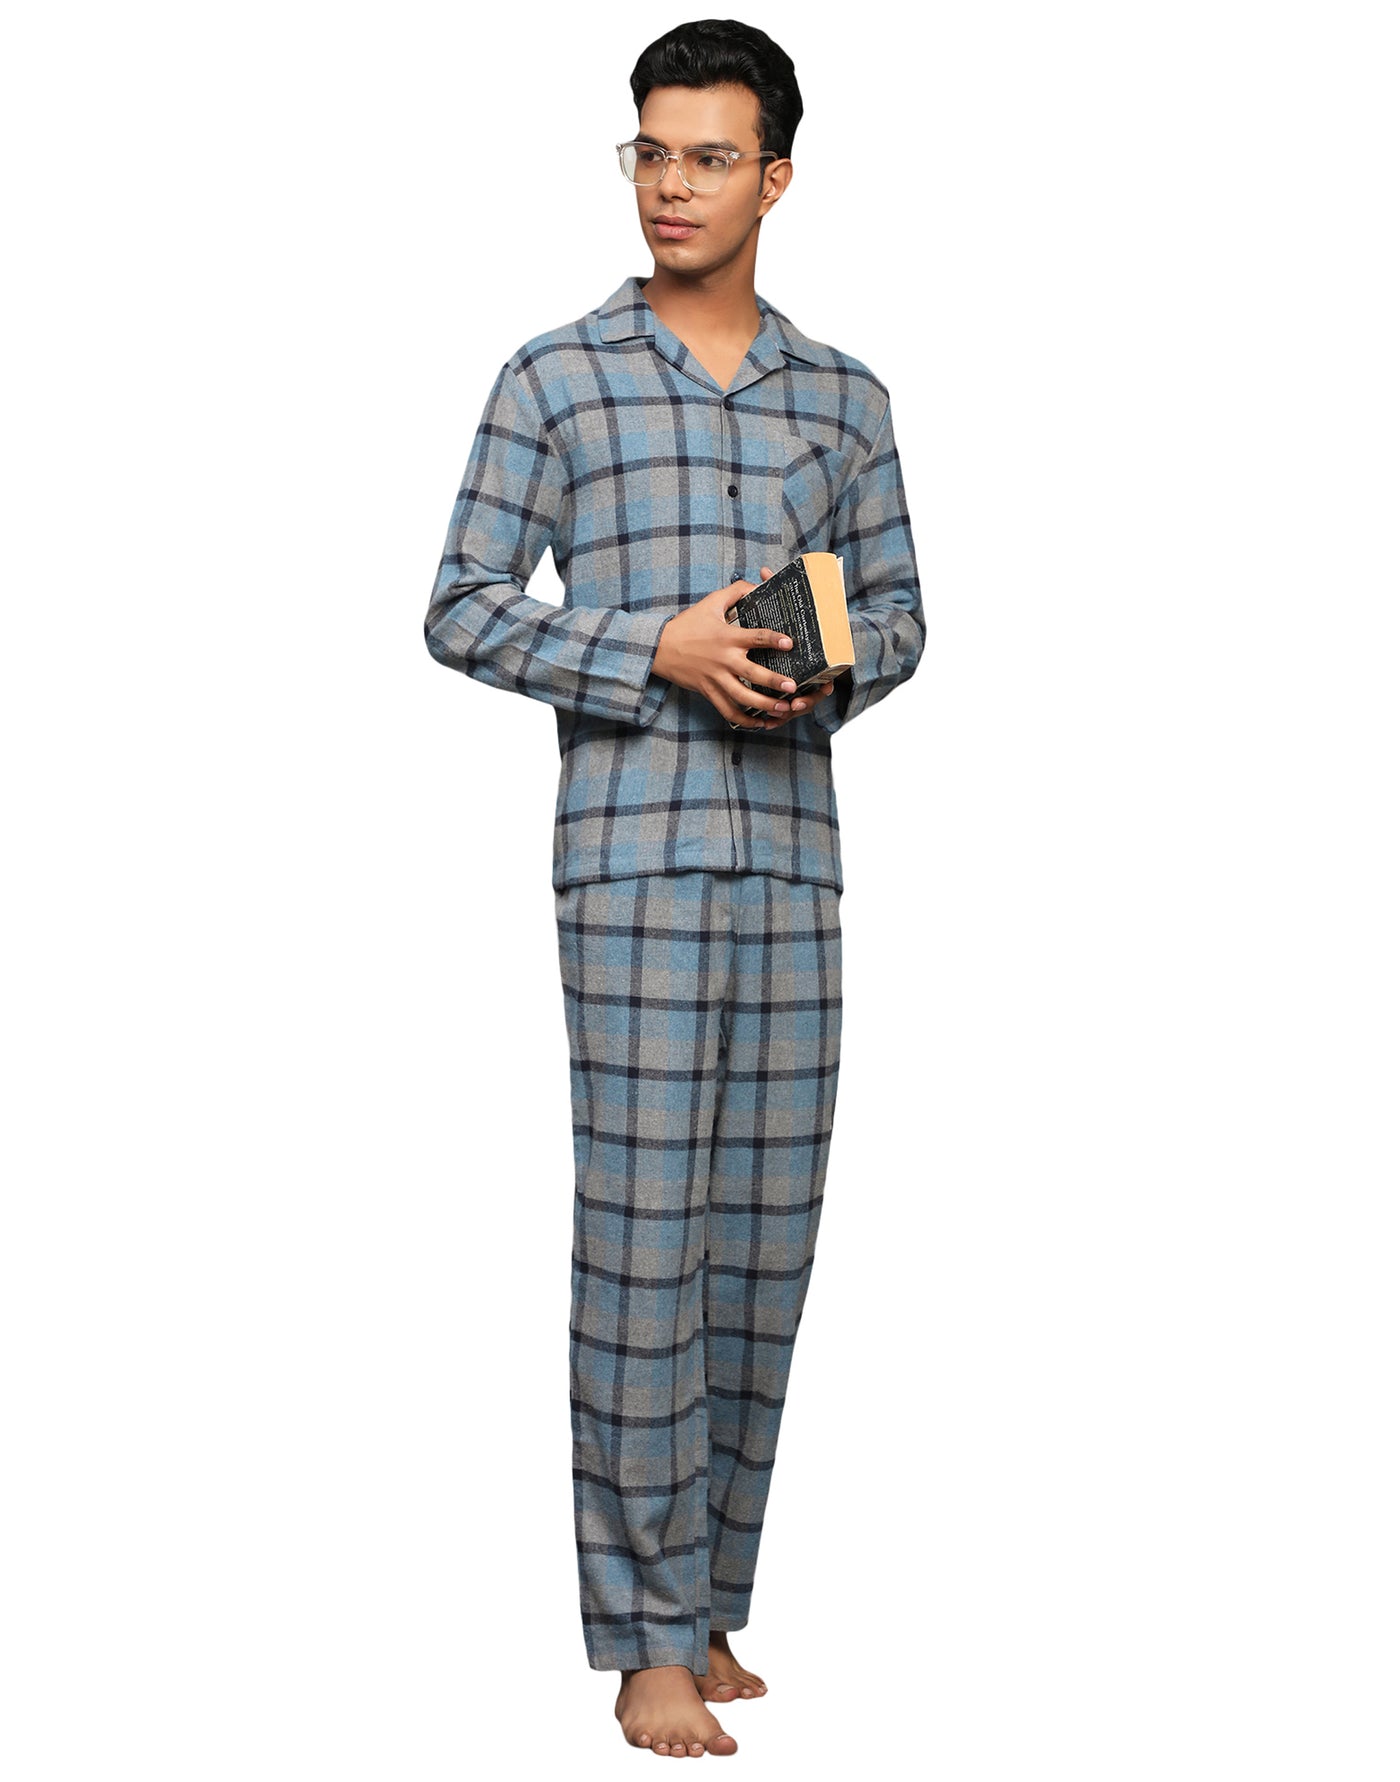 Pyjama Set for Men-Grey and Blue Tartan Checks